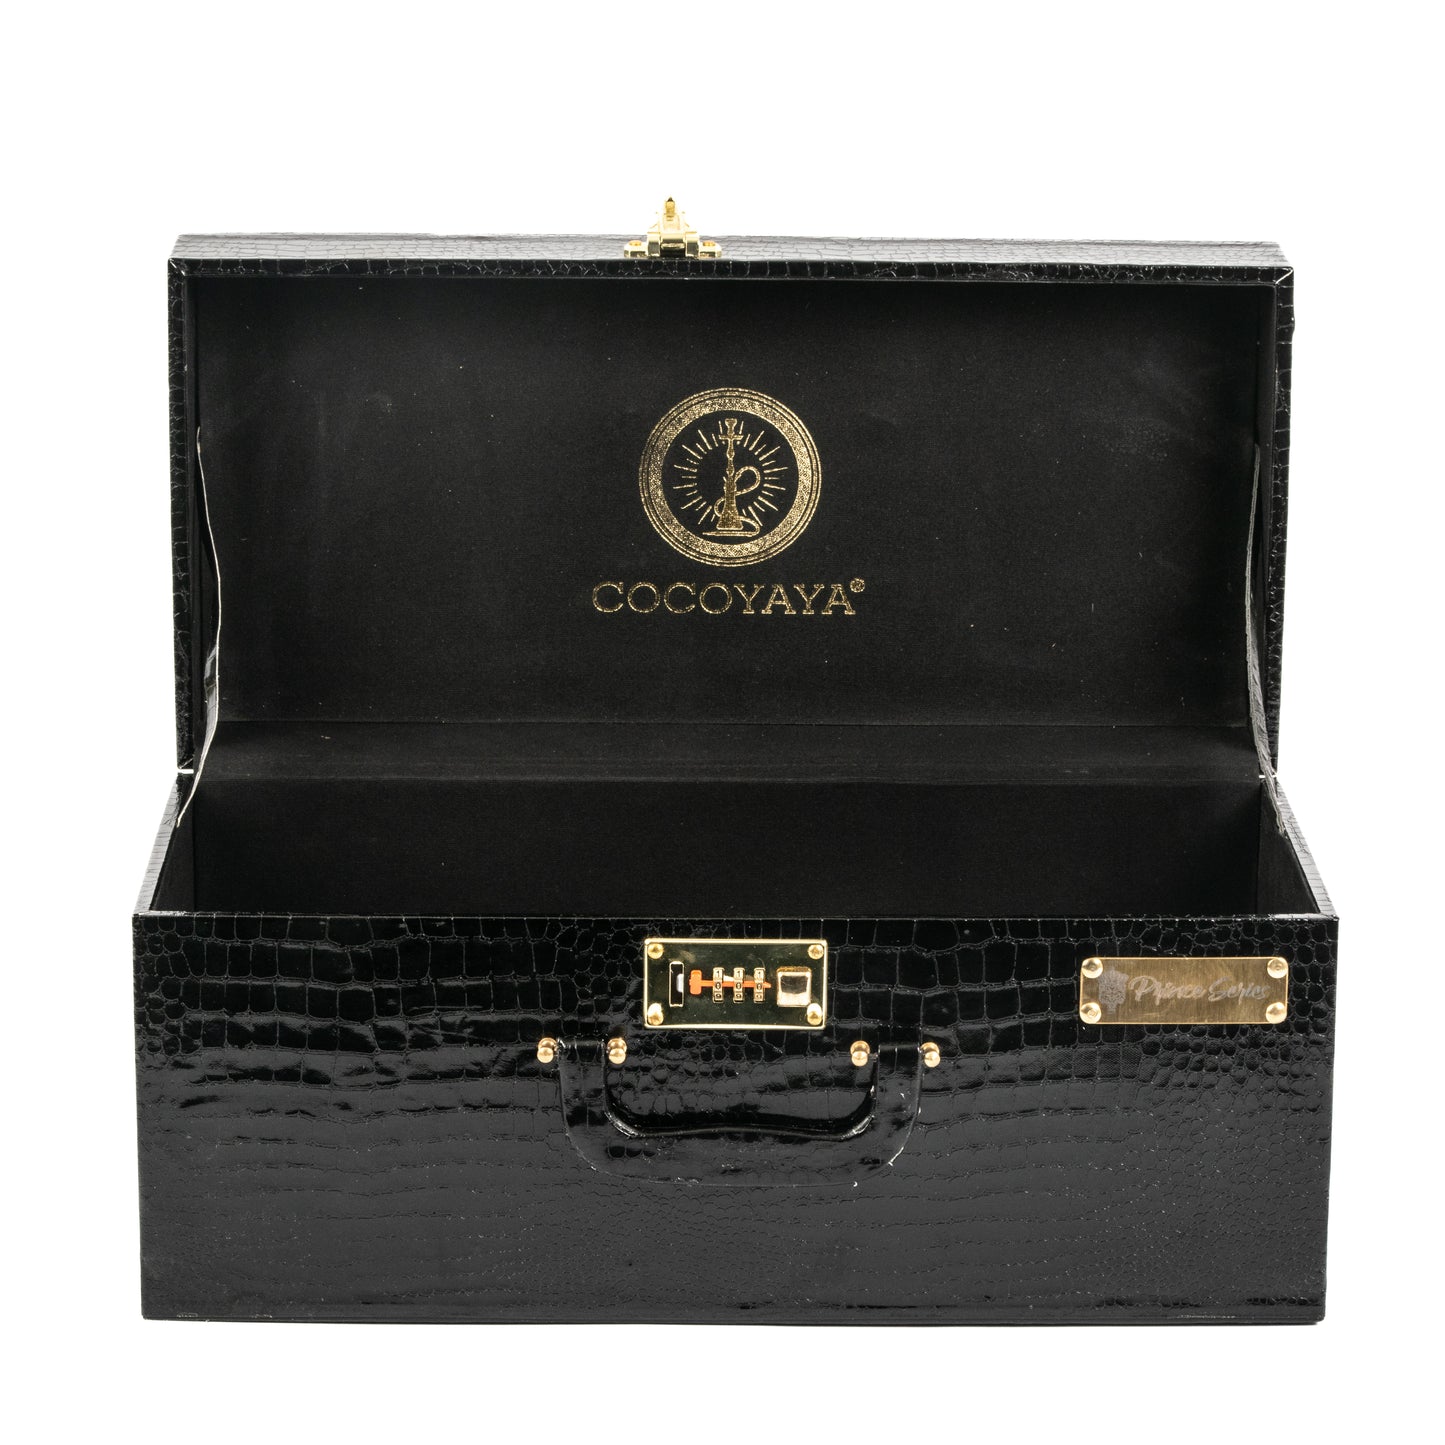 COCOYAYA Leather Cases For Hookah (Prince Series) - Black